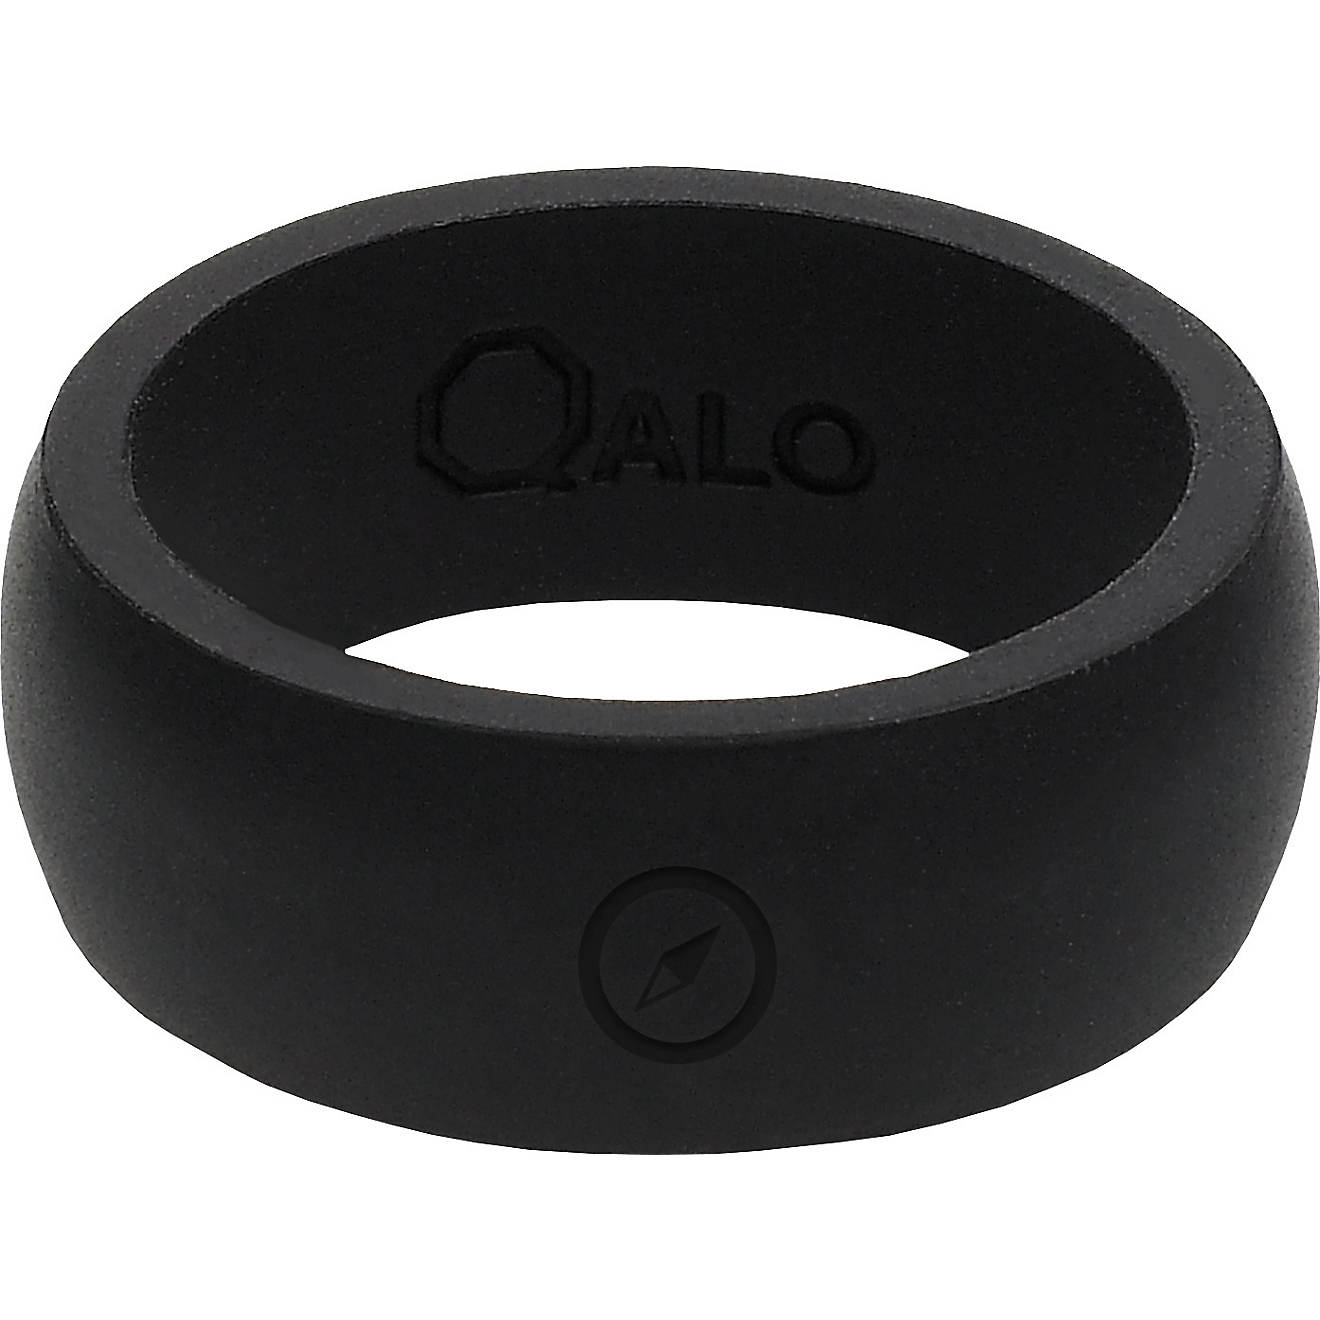 QALO Men's Athletics Wedding Ring Academy